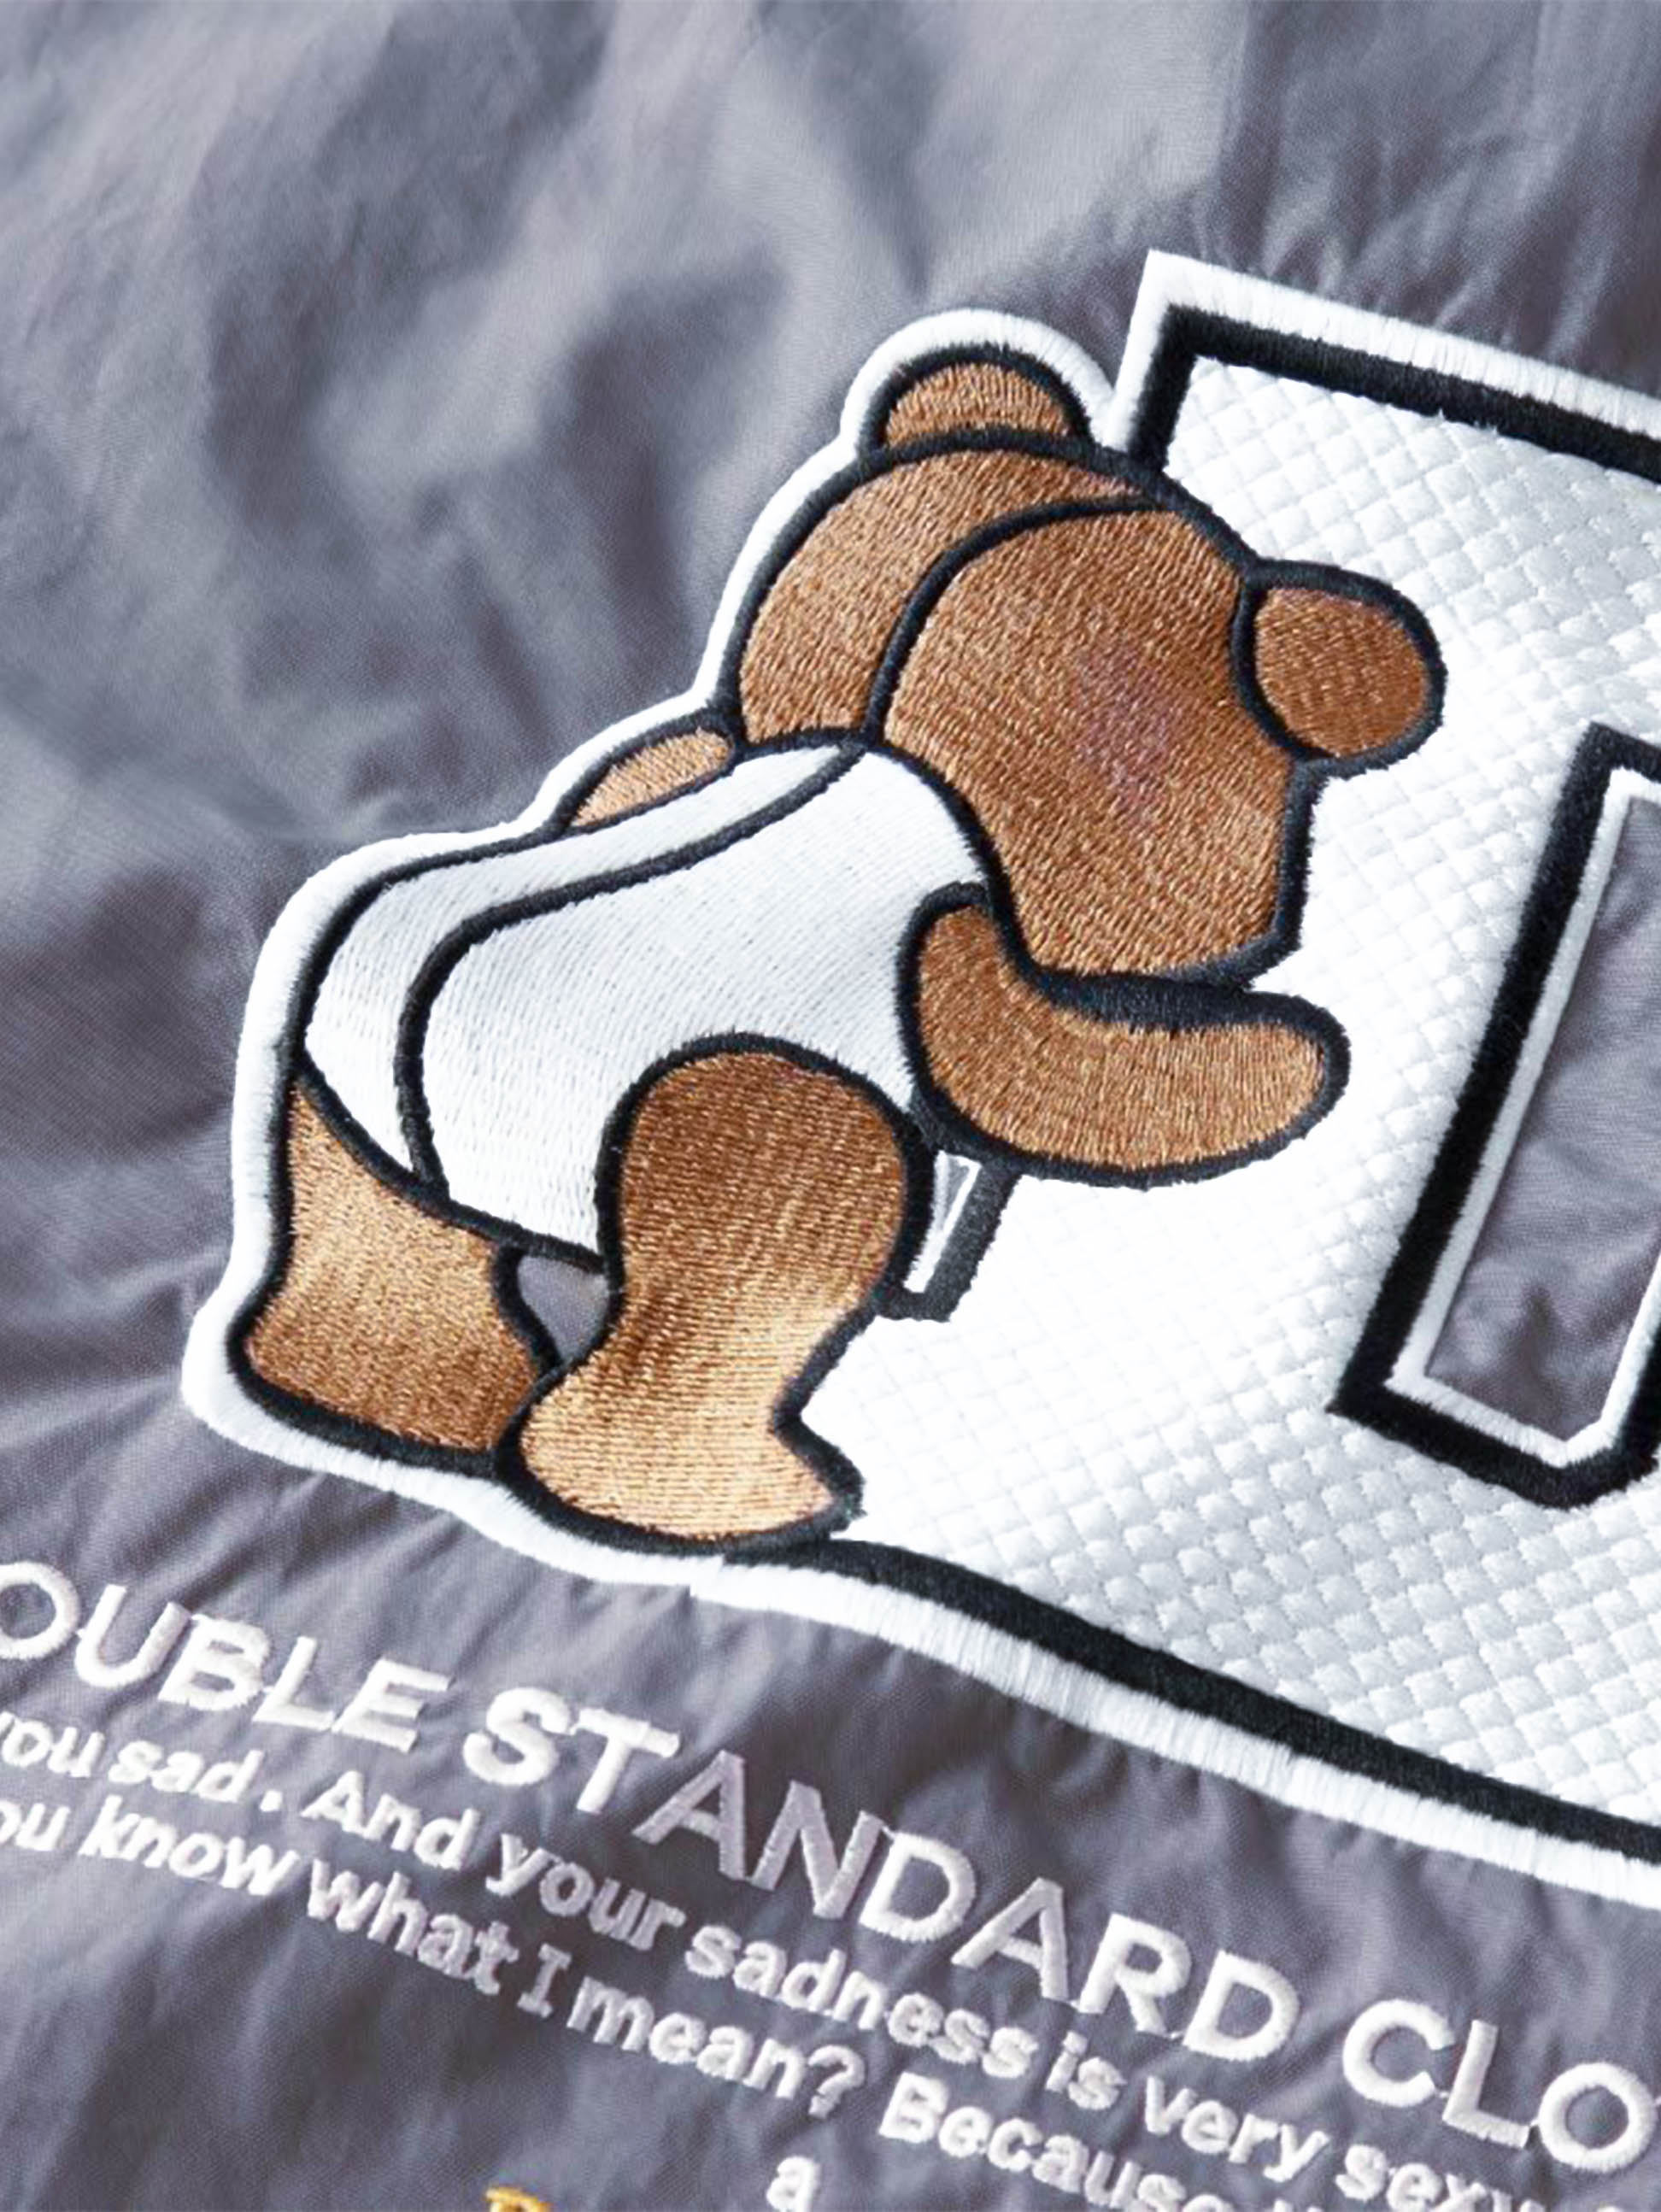 Ball&Chain / D logo bear Shopping Bag size medium